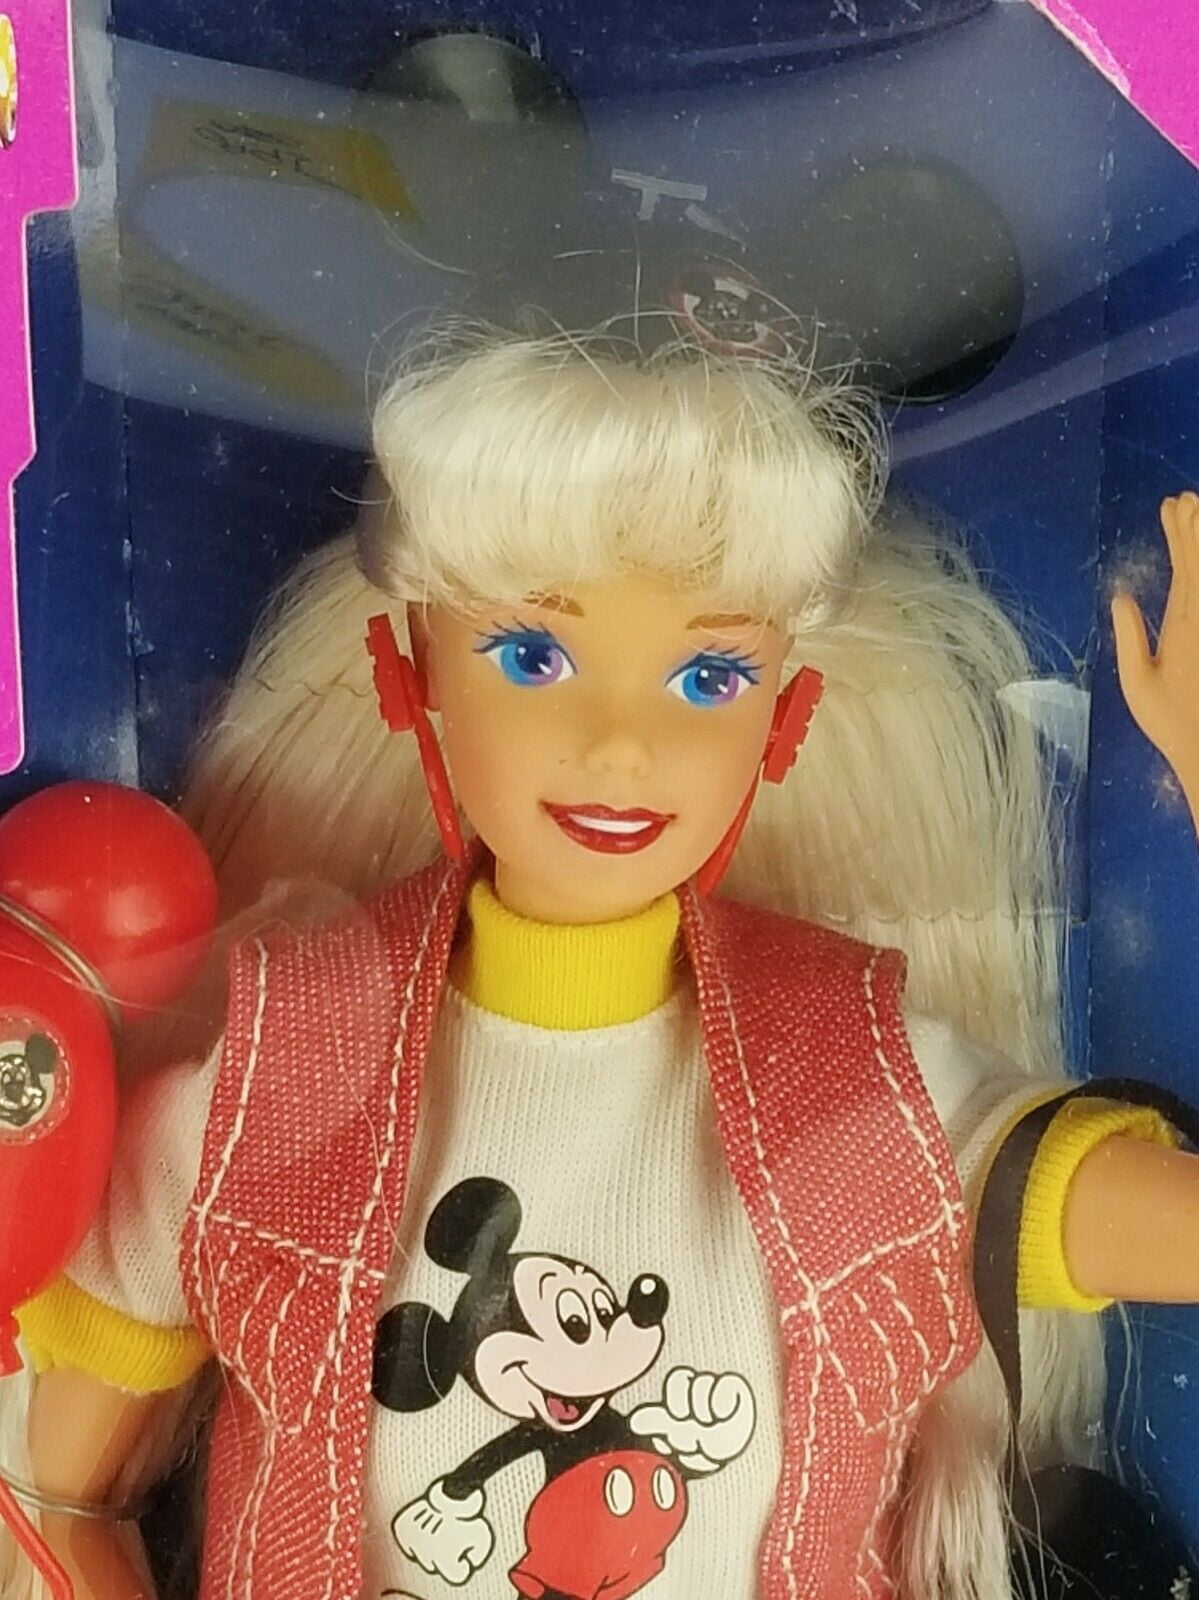 Disney Fun Barbie - Third Edition